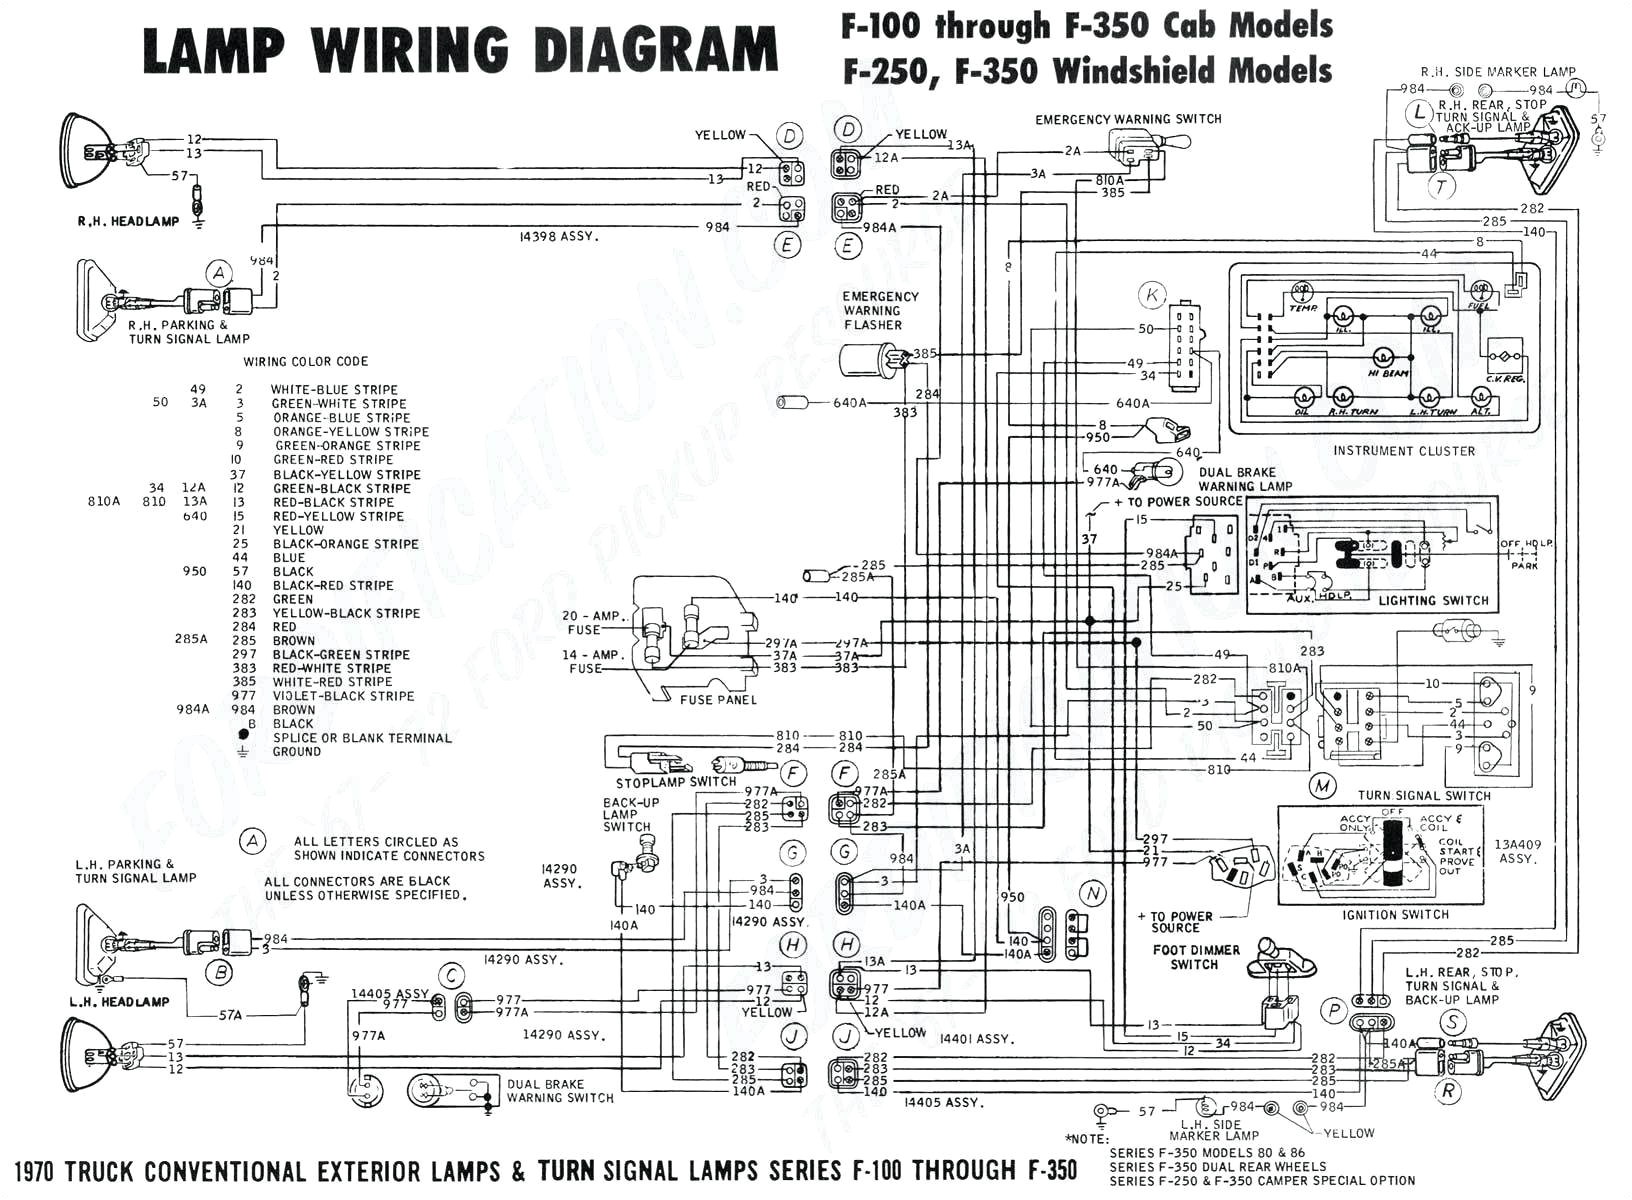 1995 Miata Wiring Diagram Ev10 Wiring Diagram Schema Diagram Database